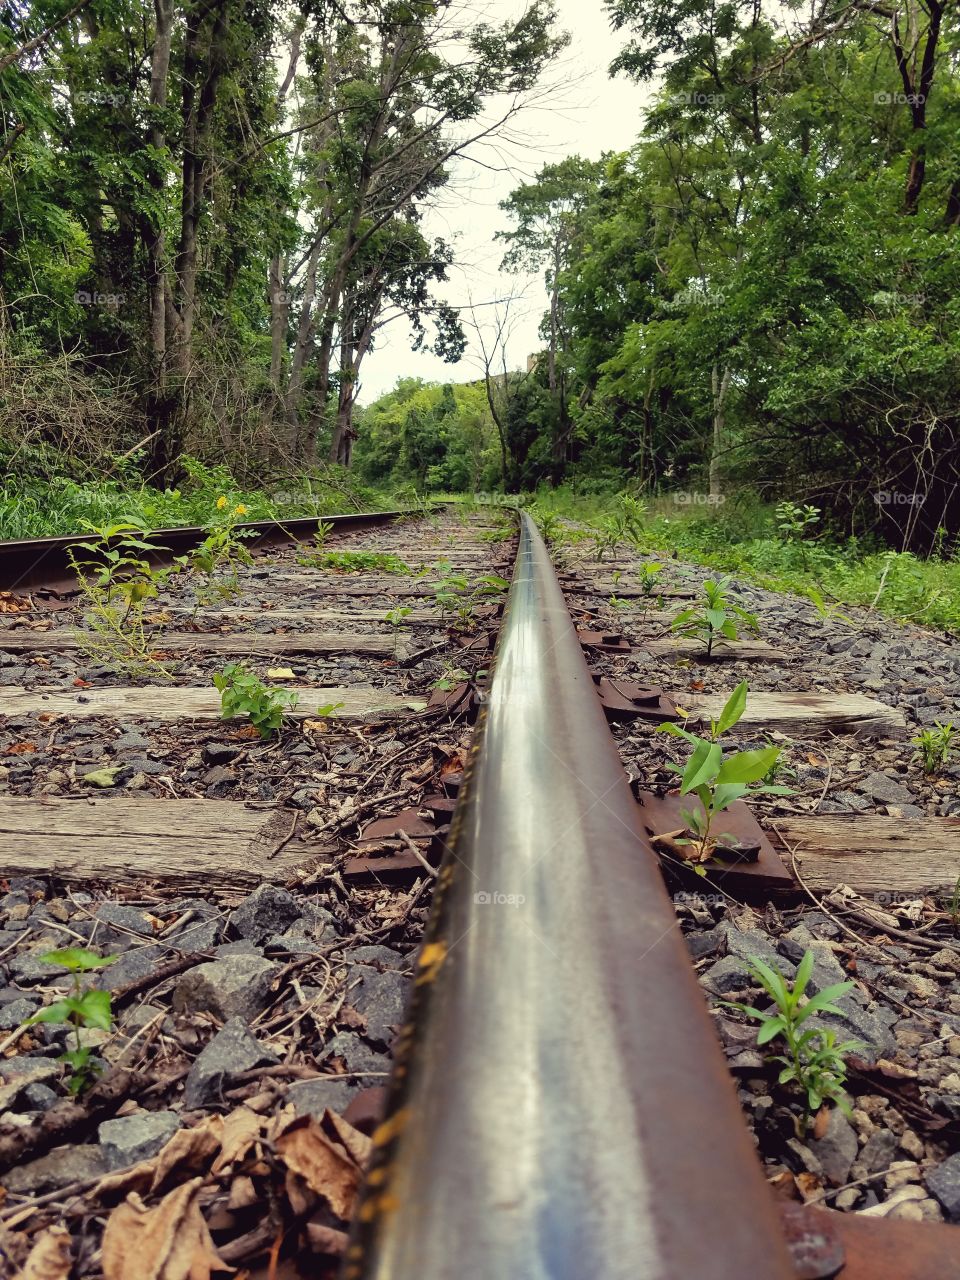 train tracks in summer